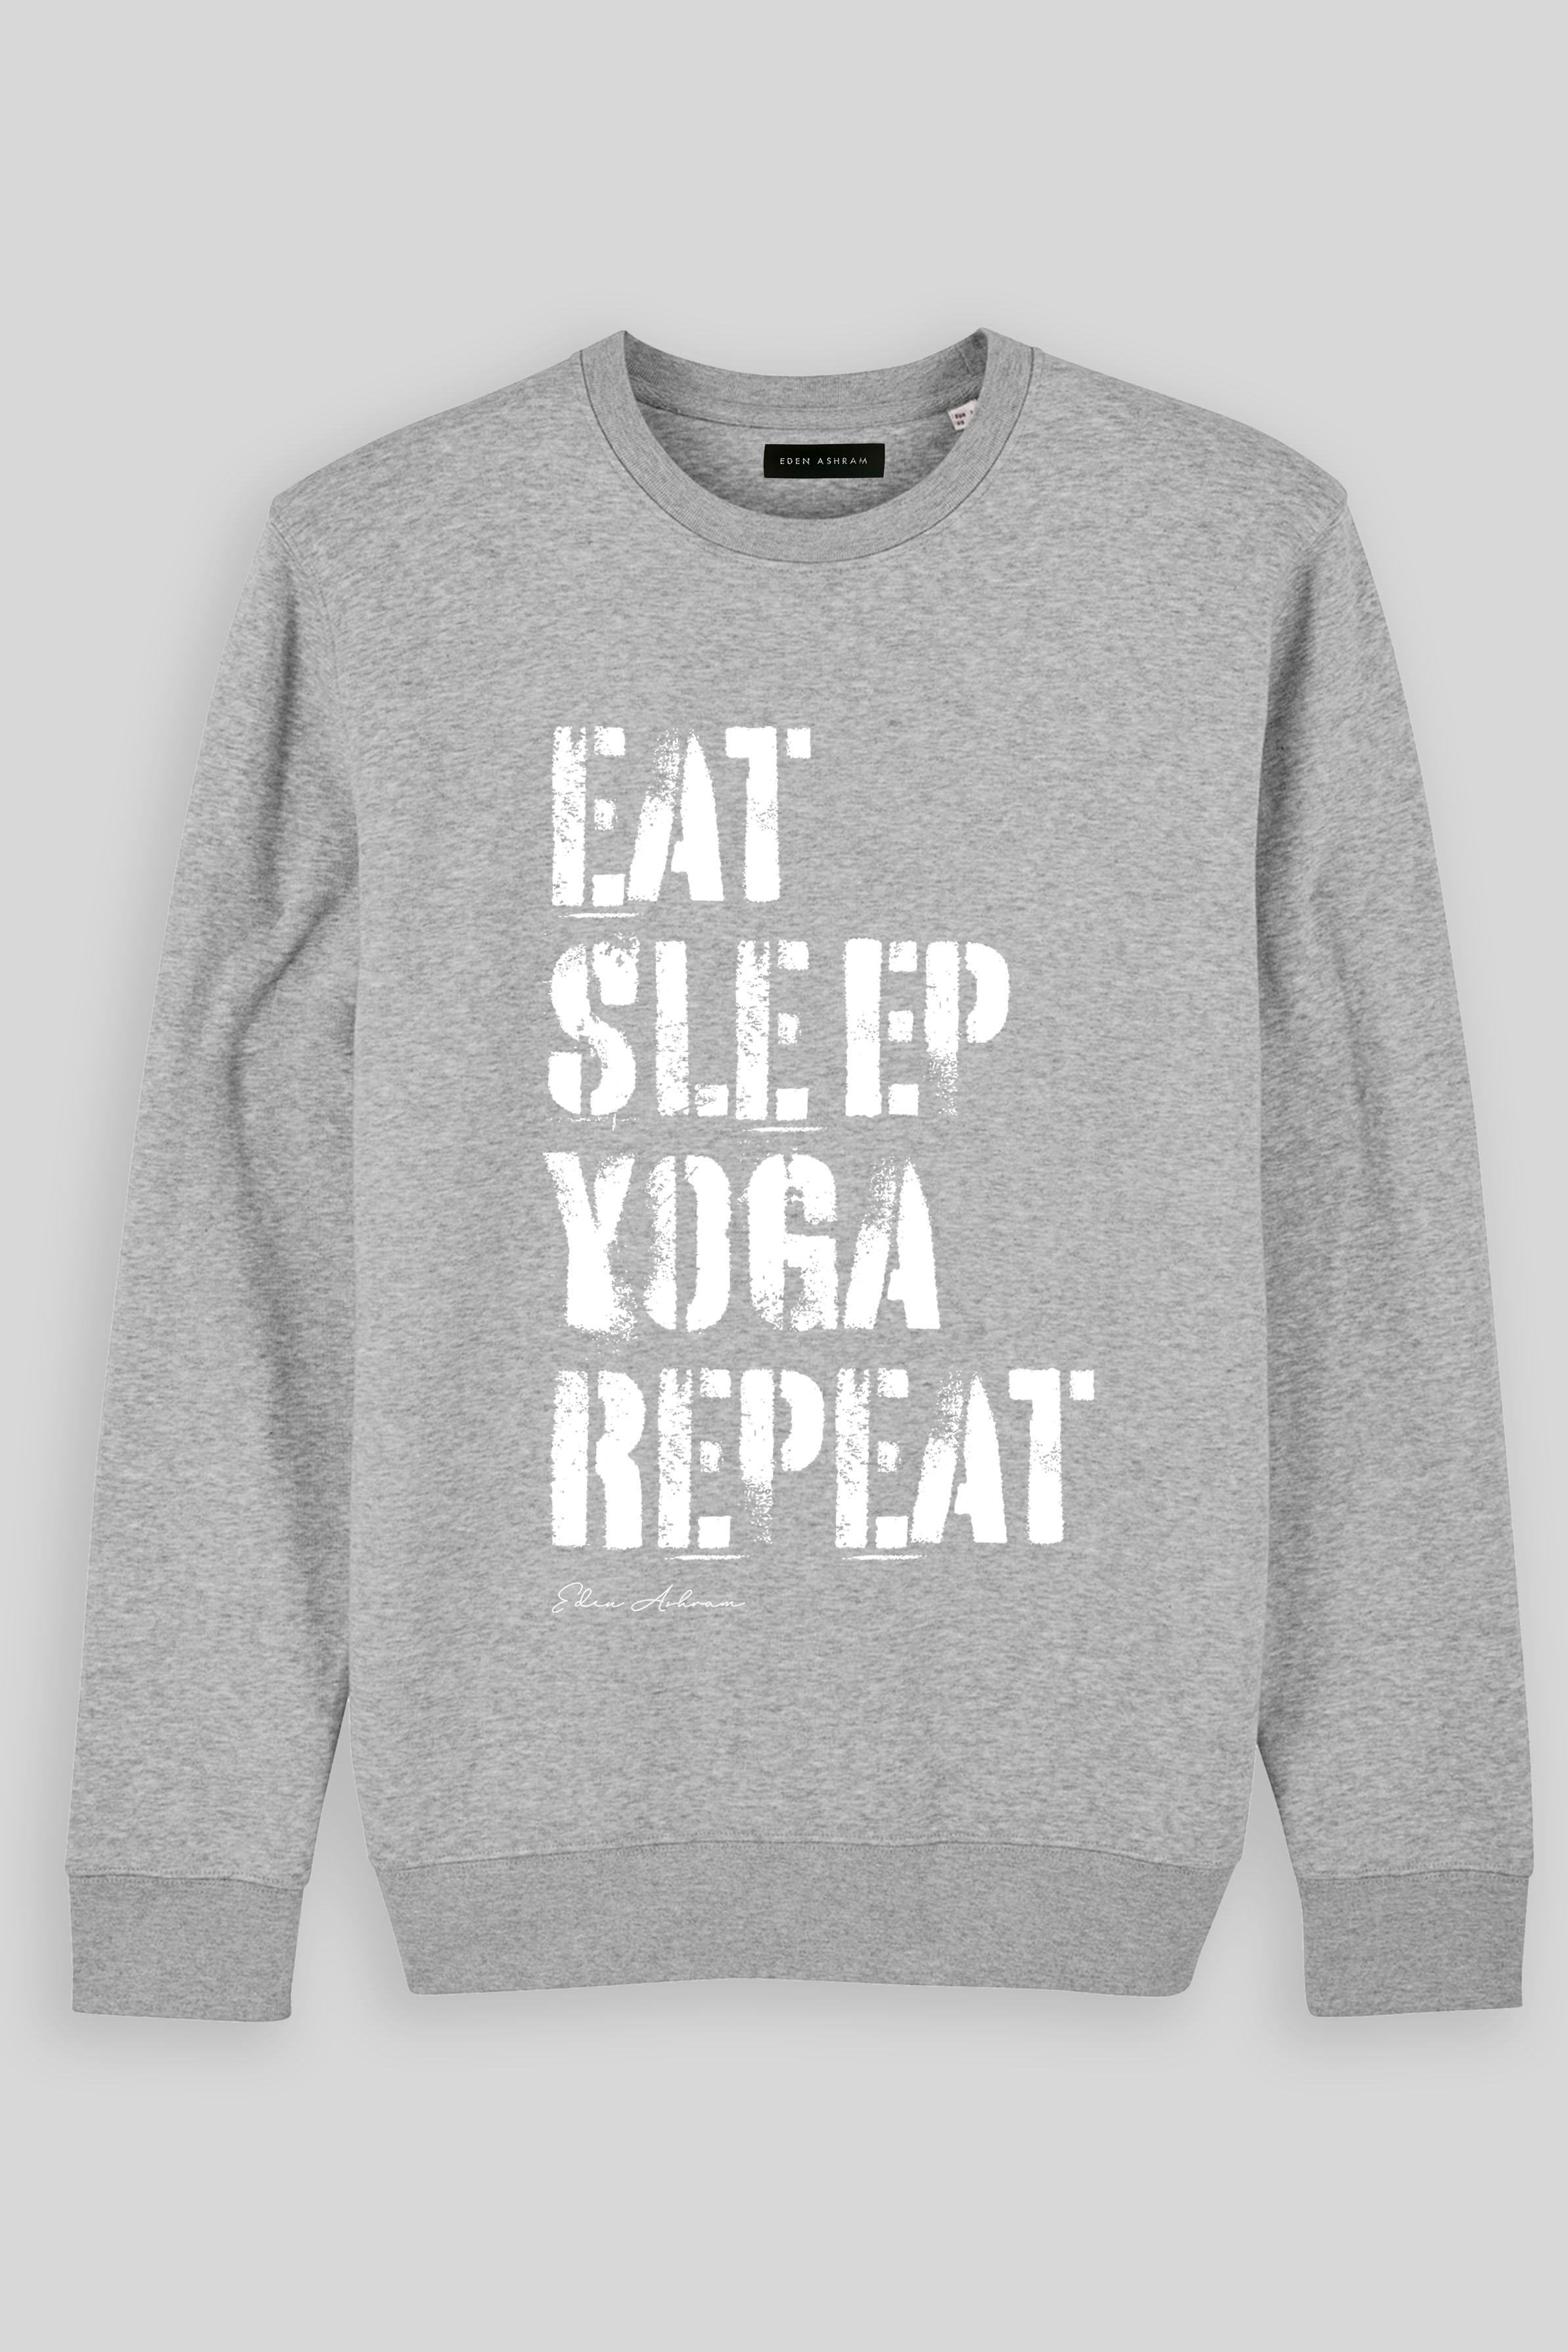 Eden Ashram Eat, Sleep, Yoga Repeat Premium Crew Neck Sweatshirt Heather Grey